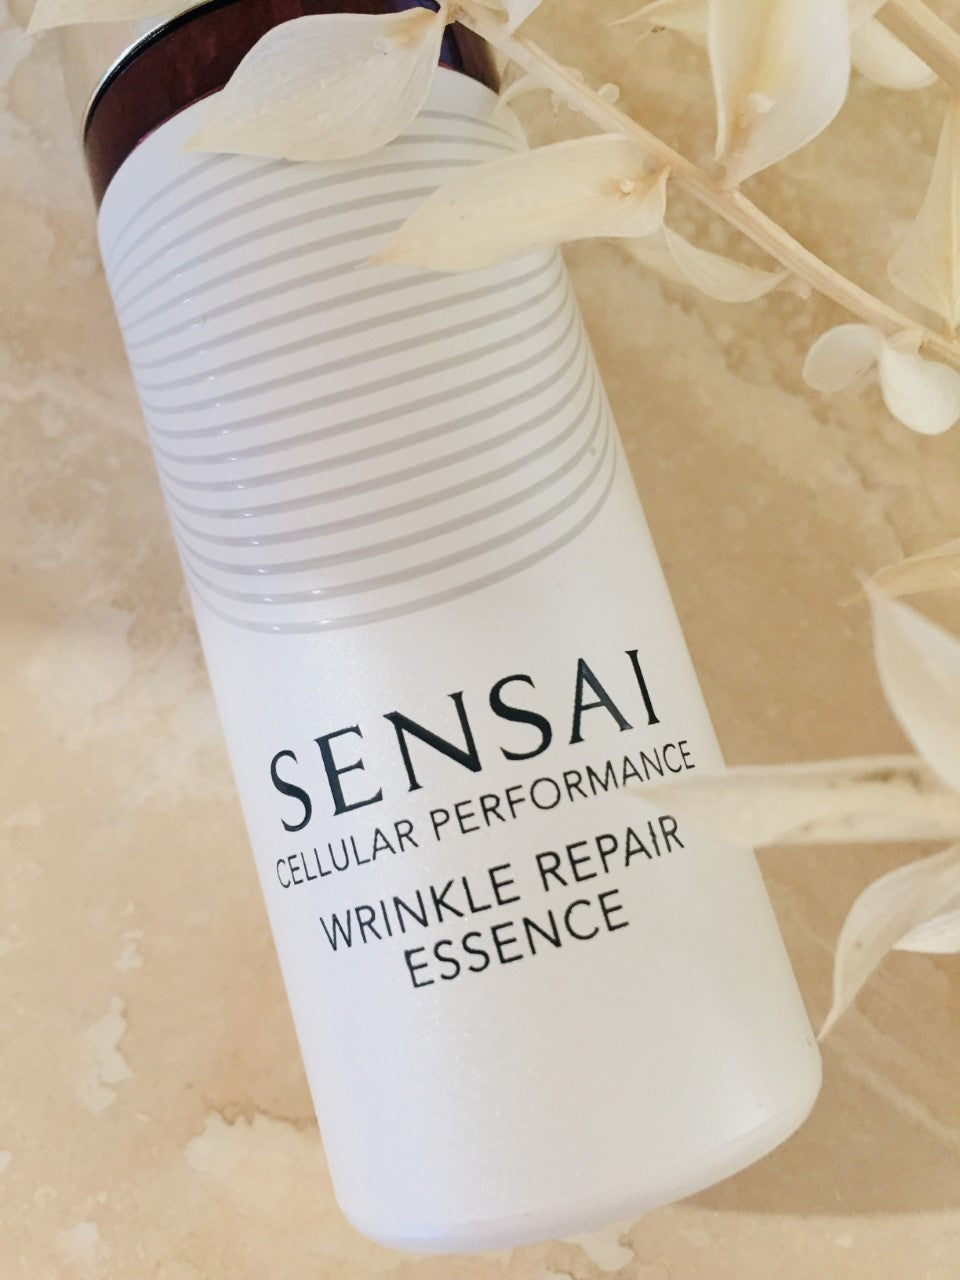 Sensai Cellular Performance Wrinkle Repair Essence